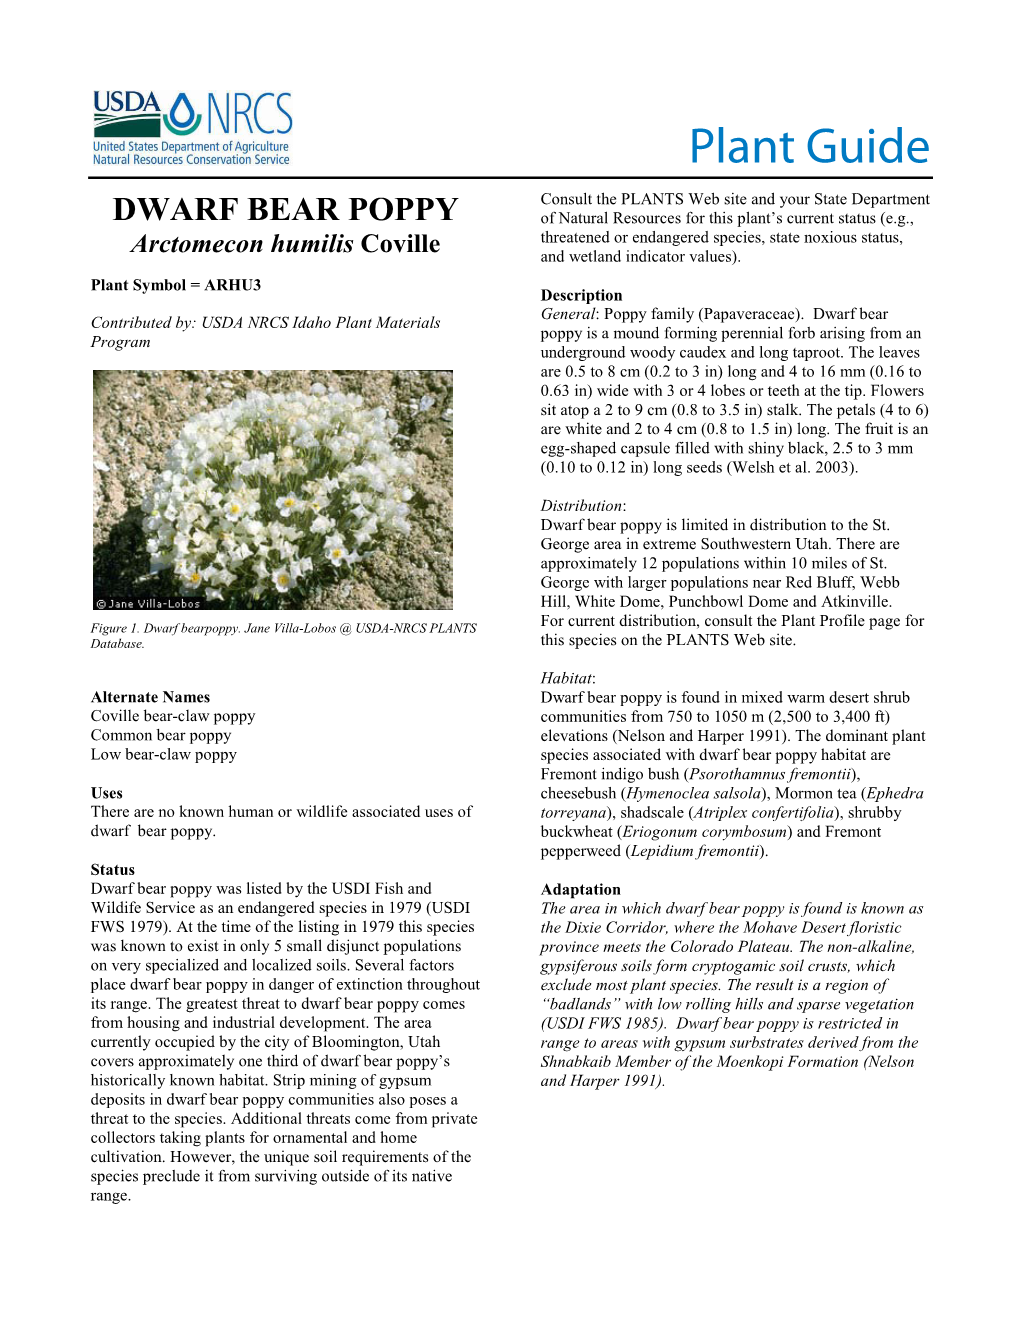 Dwarf Bearpoppy (Arctomecon Humilis) Plant Guide